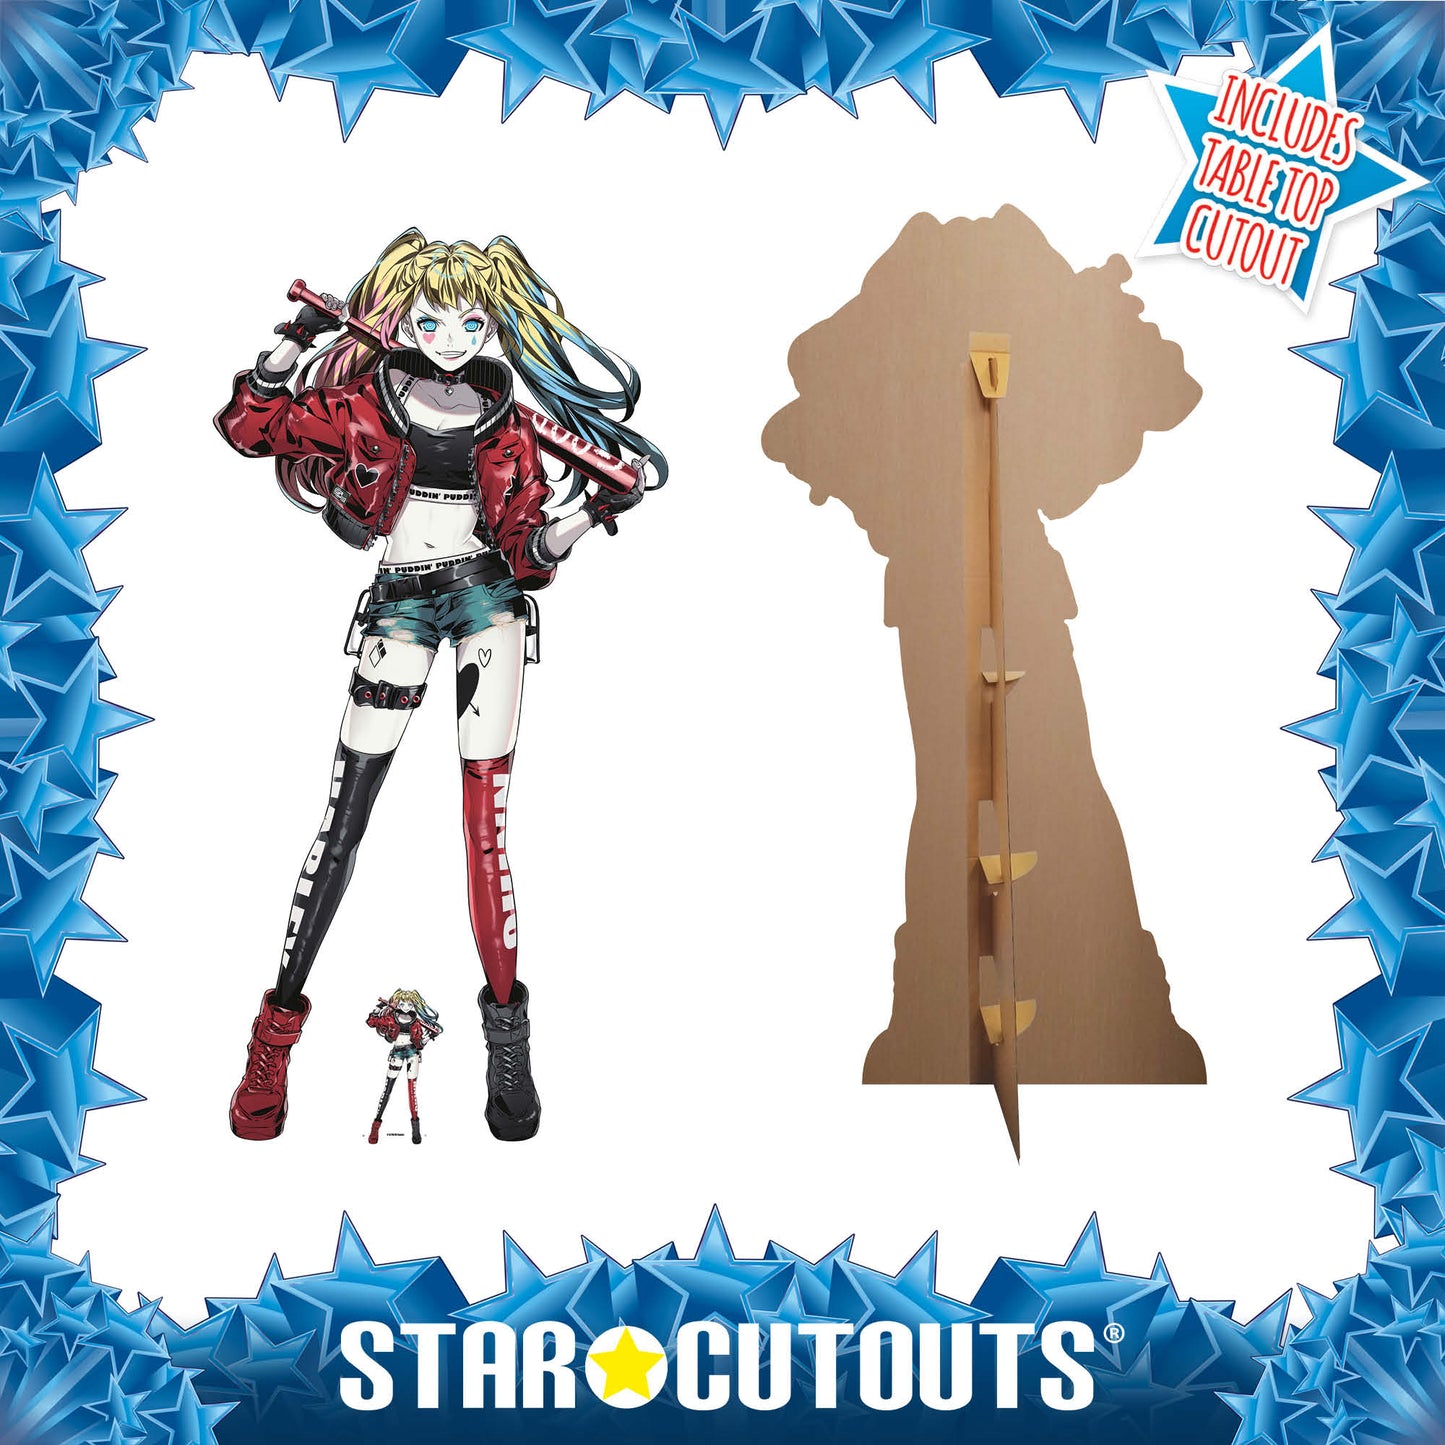 SC4256 Harley Quinn Anime Style Cardboard Cut Out Height 176cm